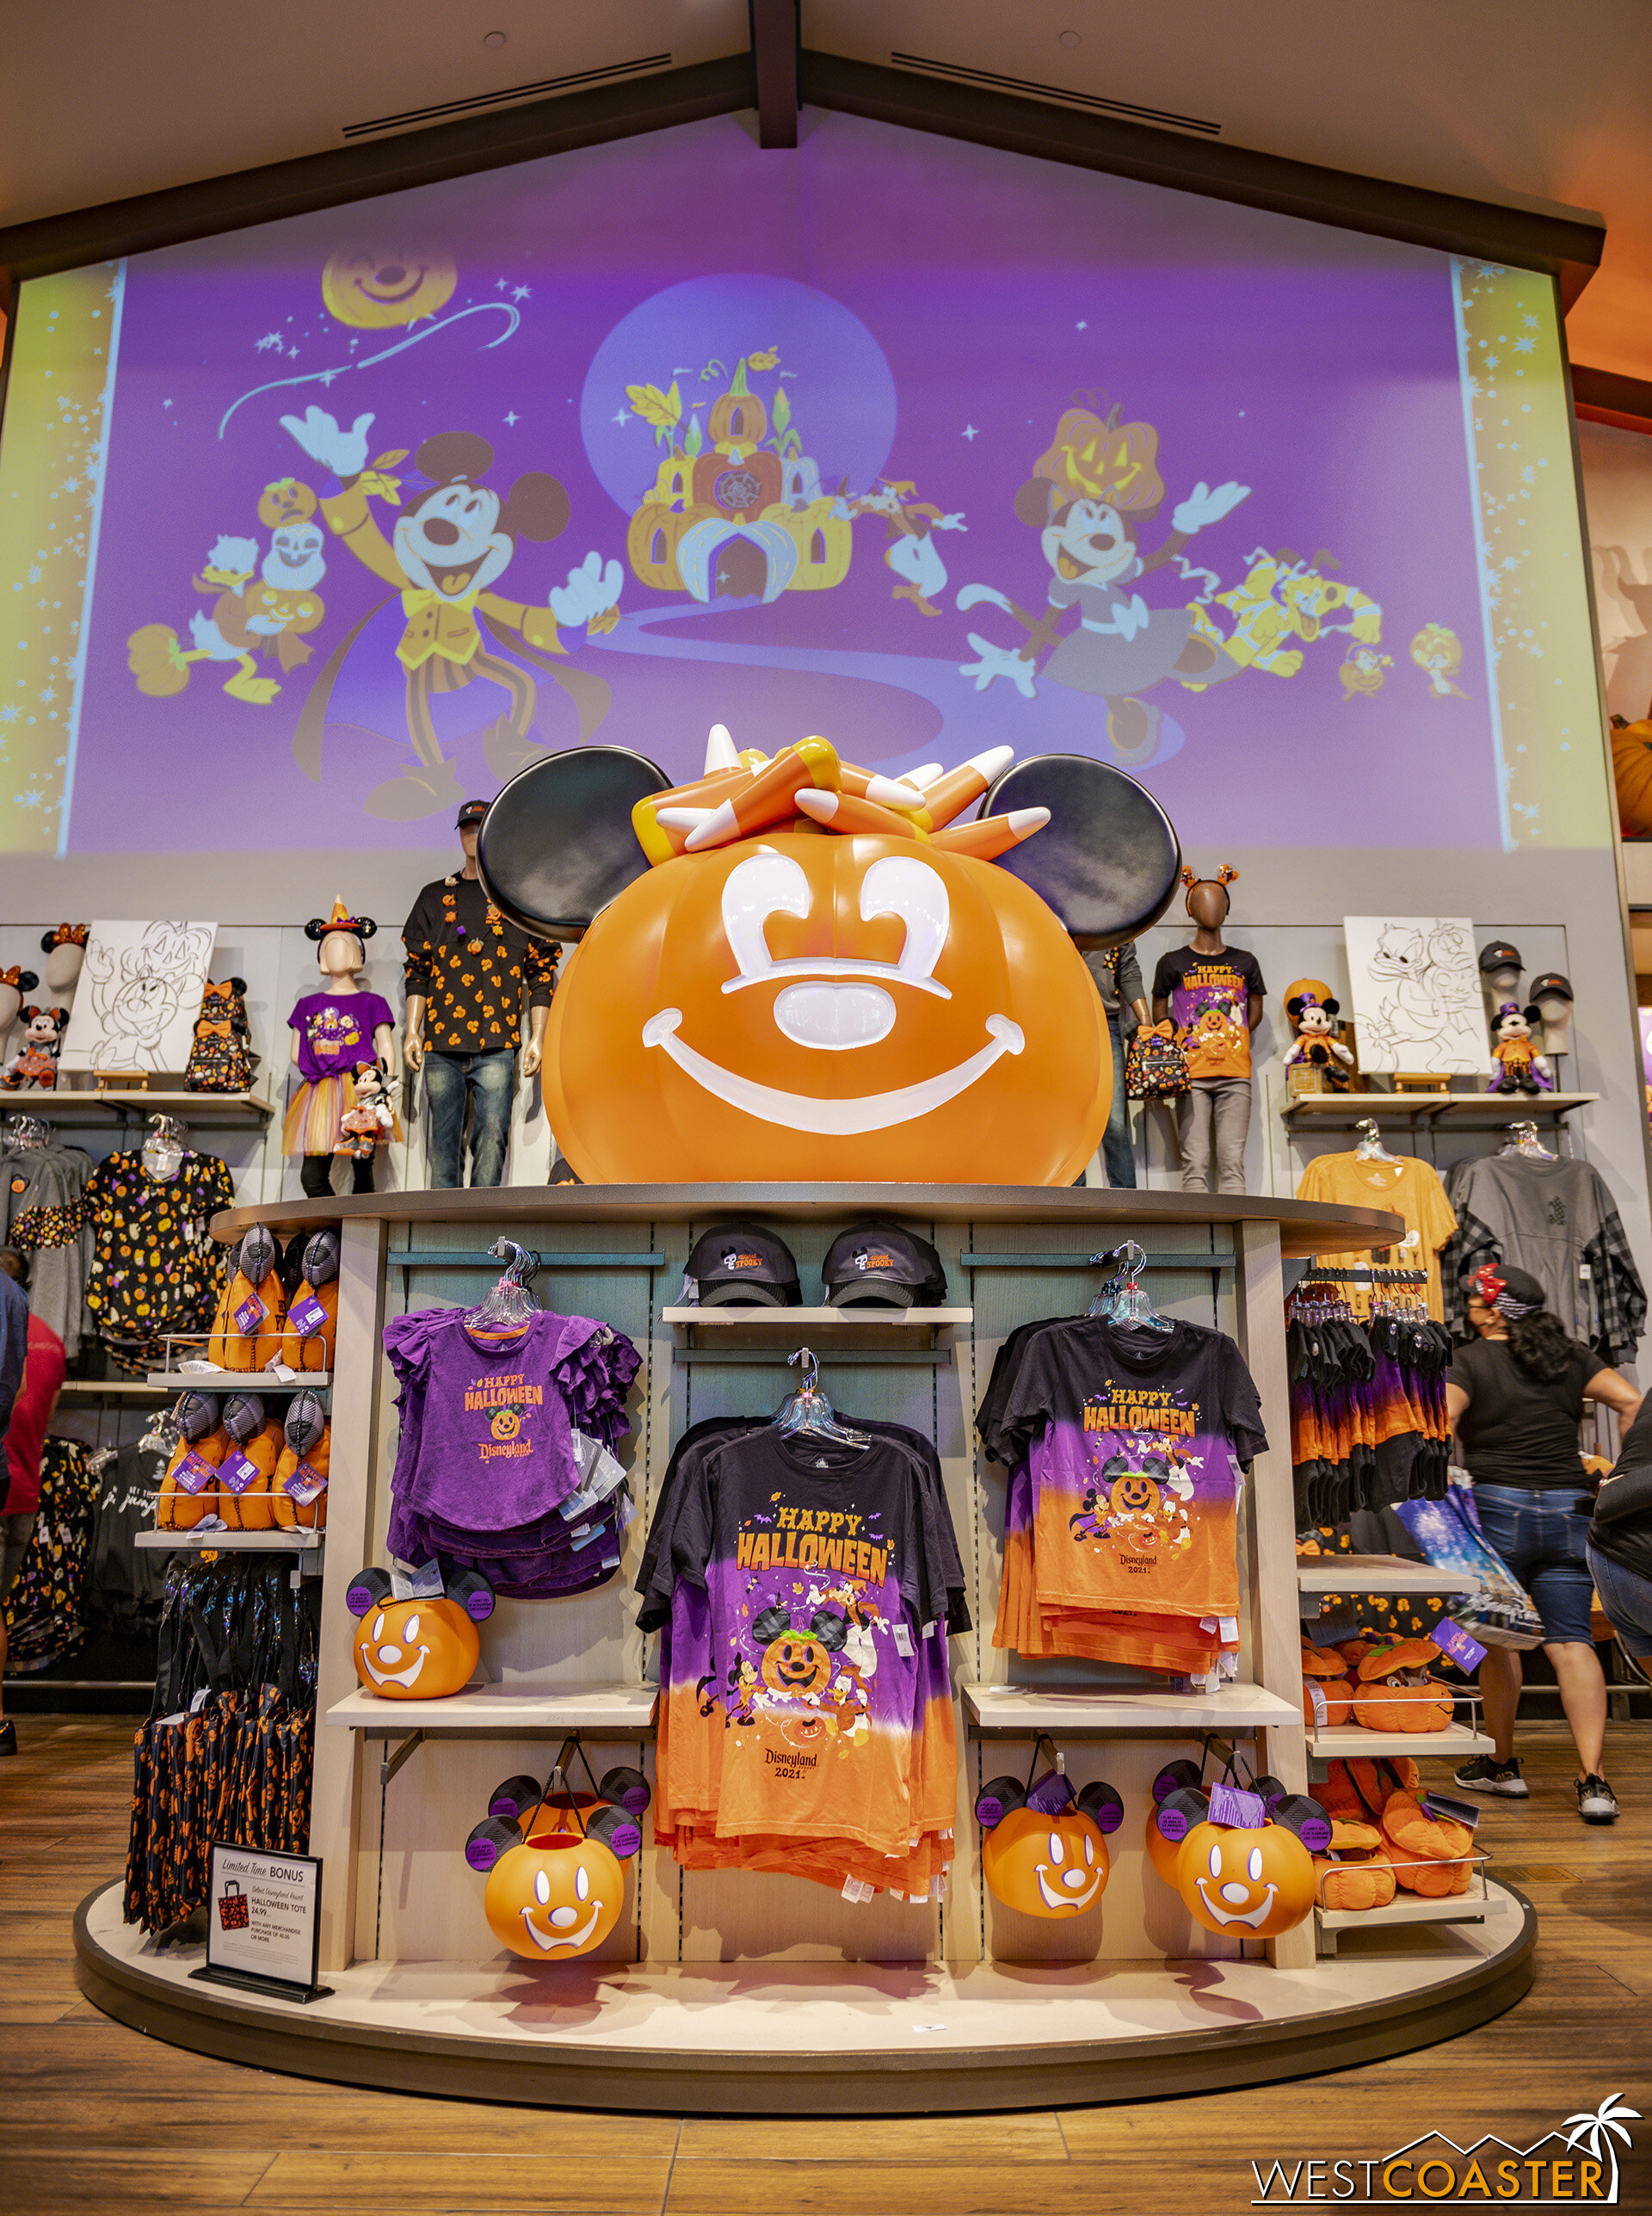  Inside World of Disney, official Disney Halloween merchandise has been on sale. 